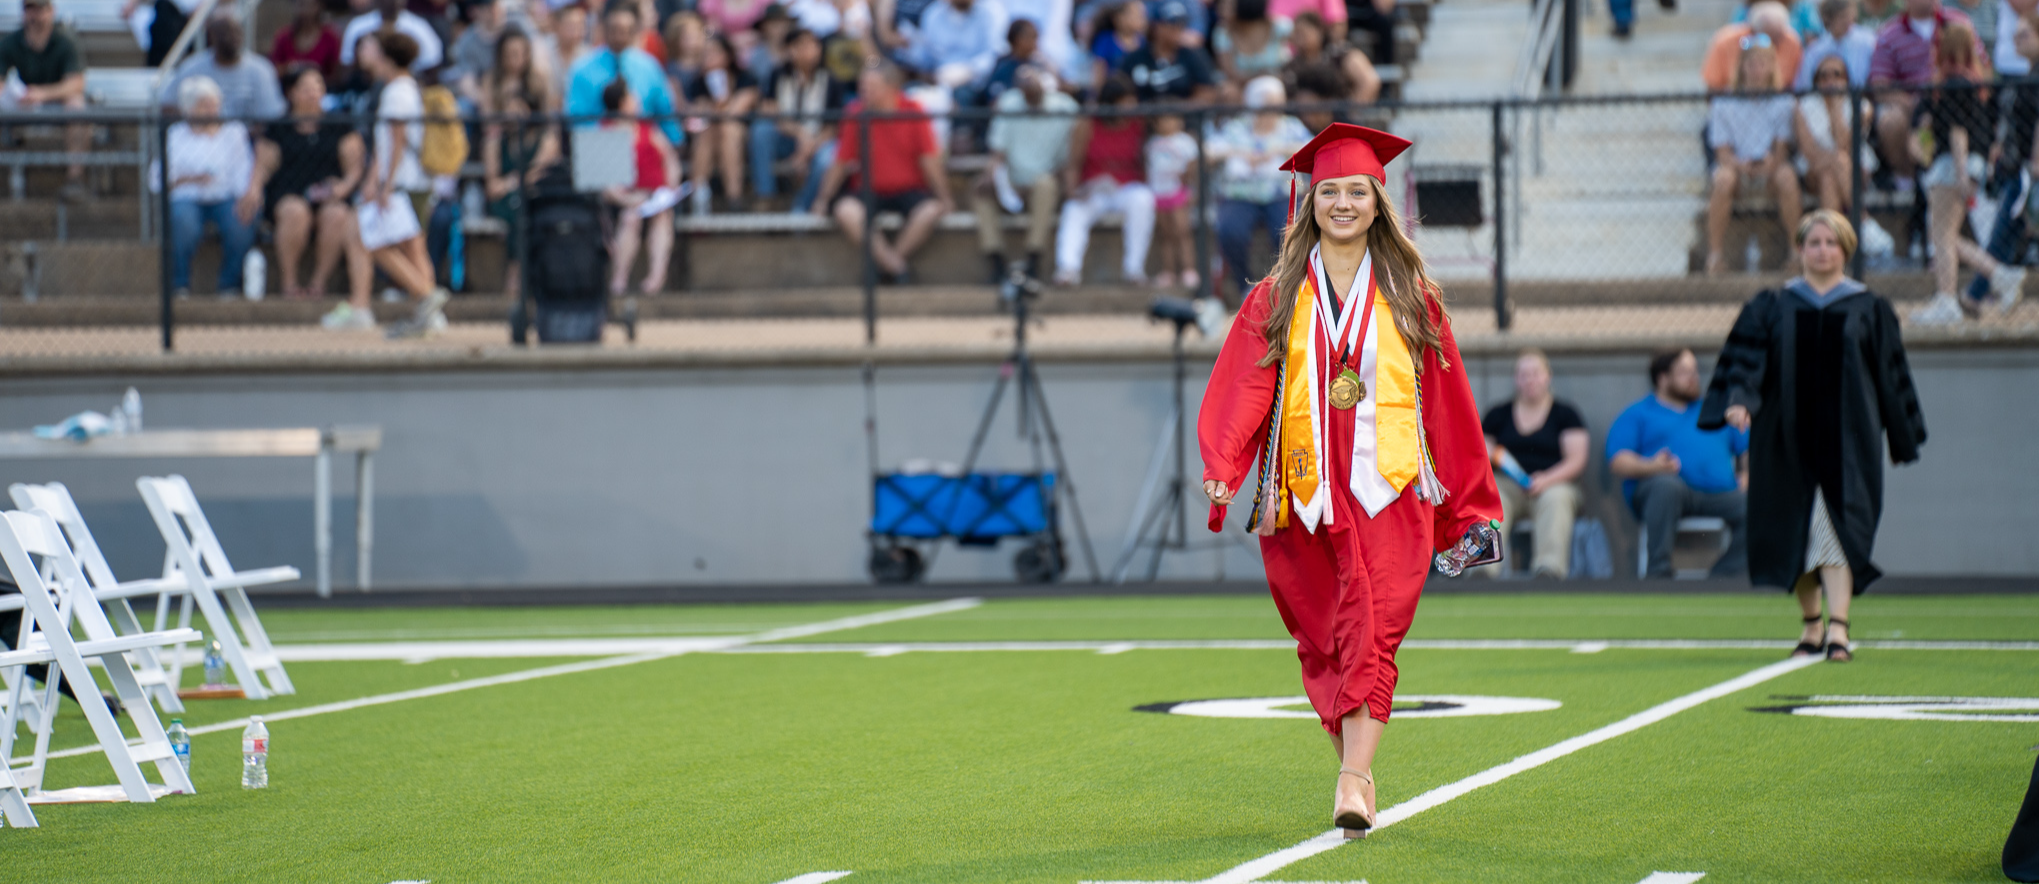 student walking on turf at graduation